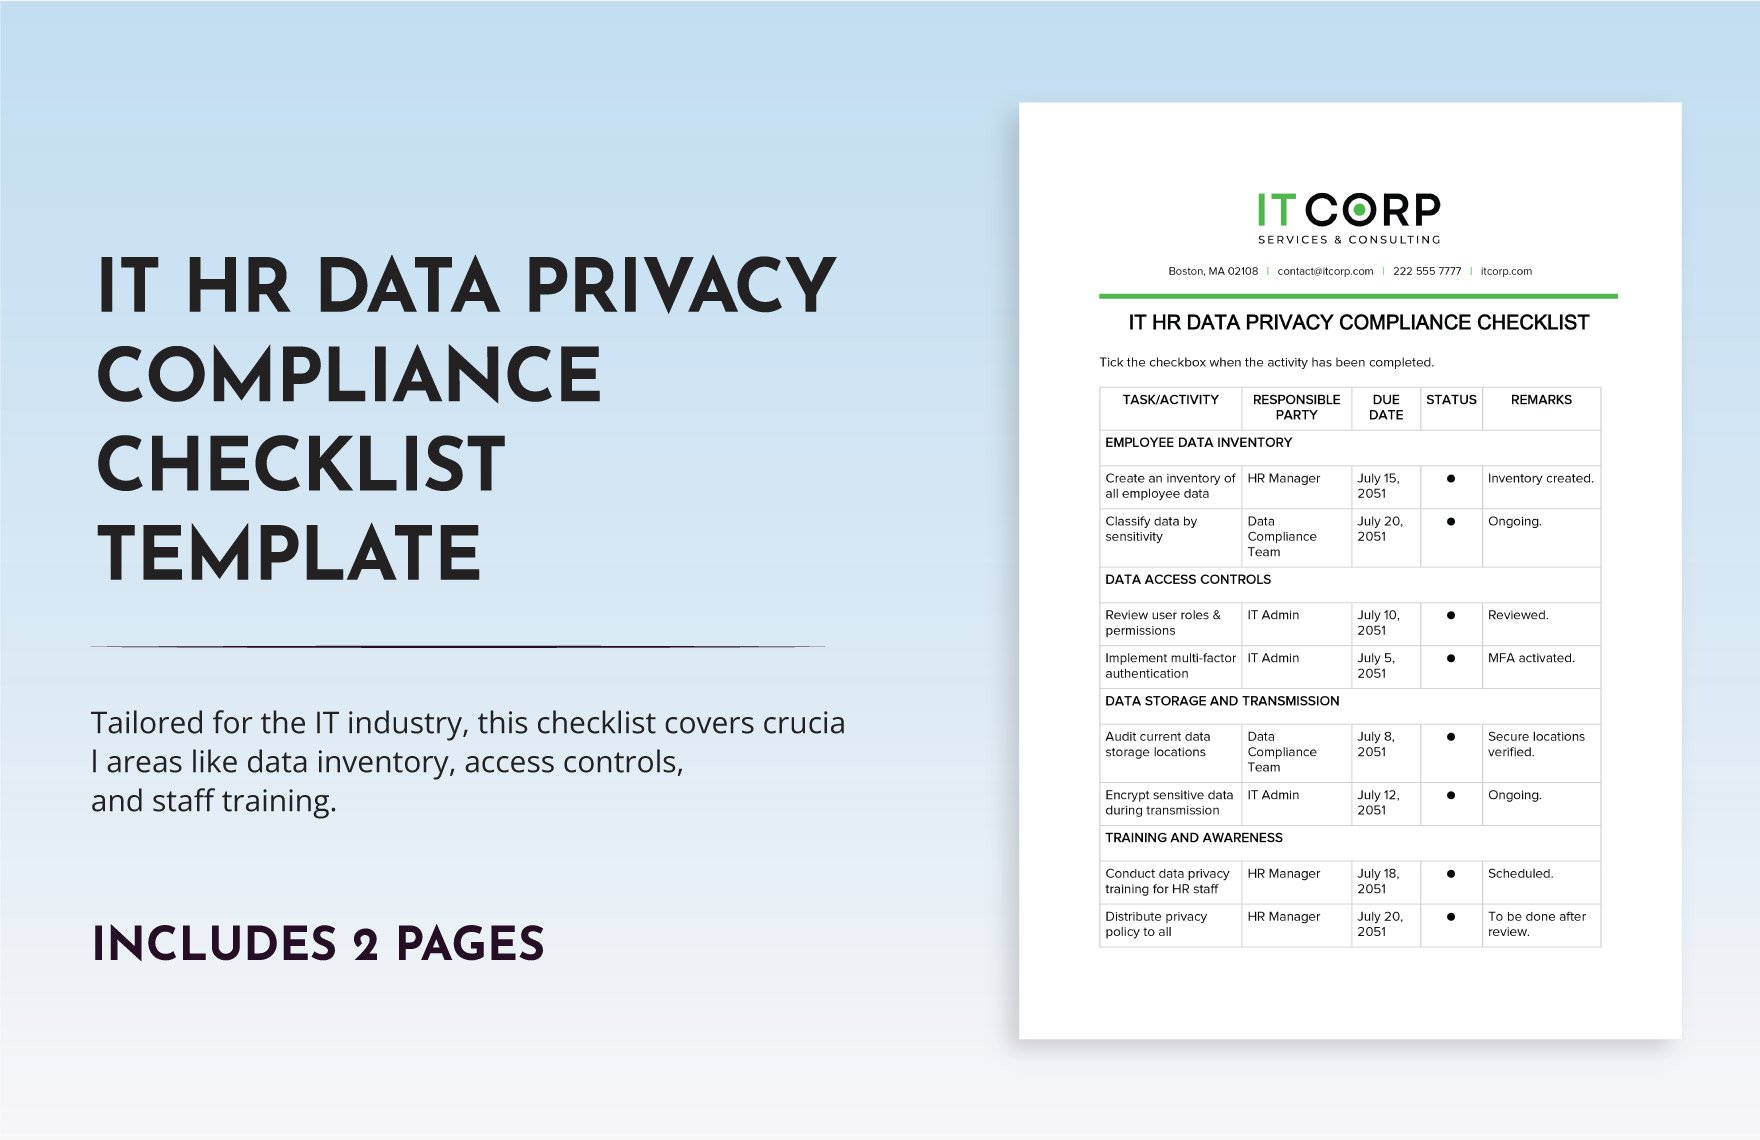 IT HR Data Privacy Compliance Checklist Template